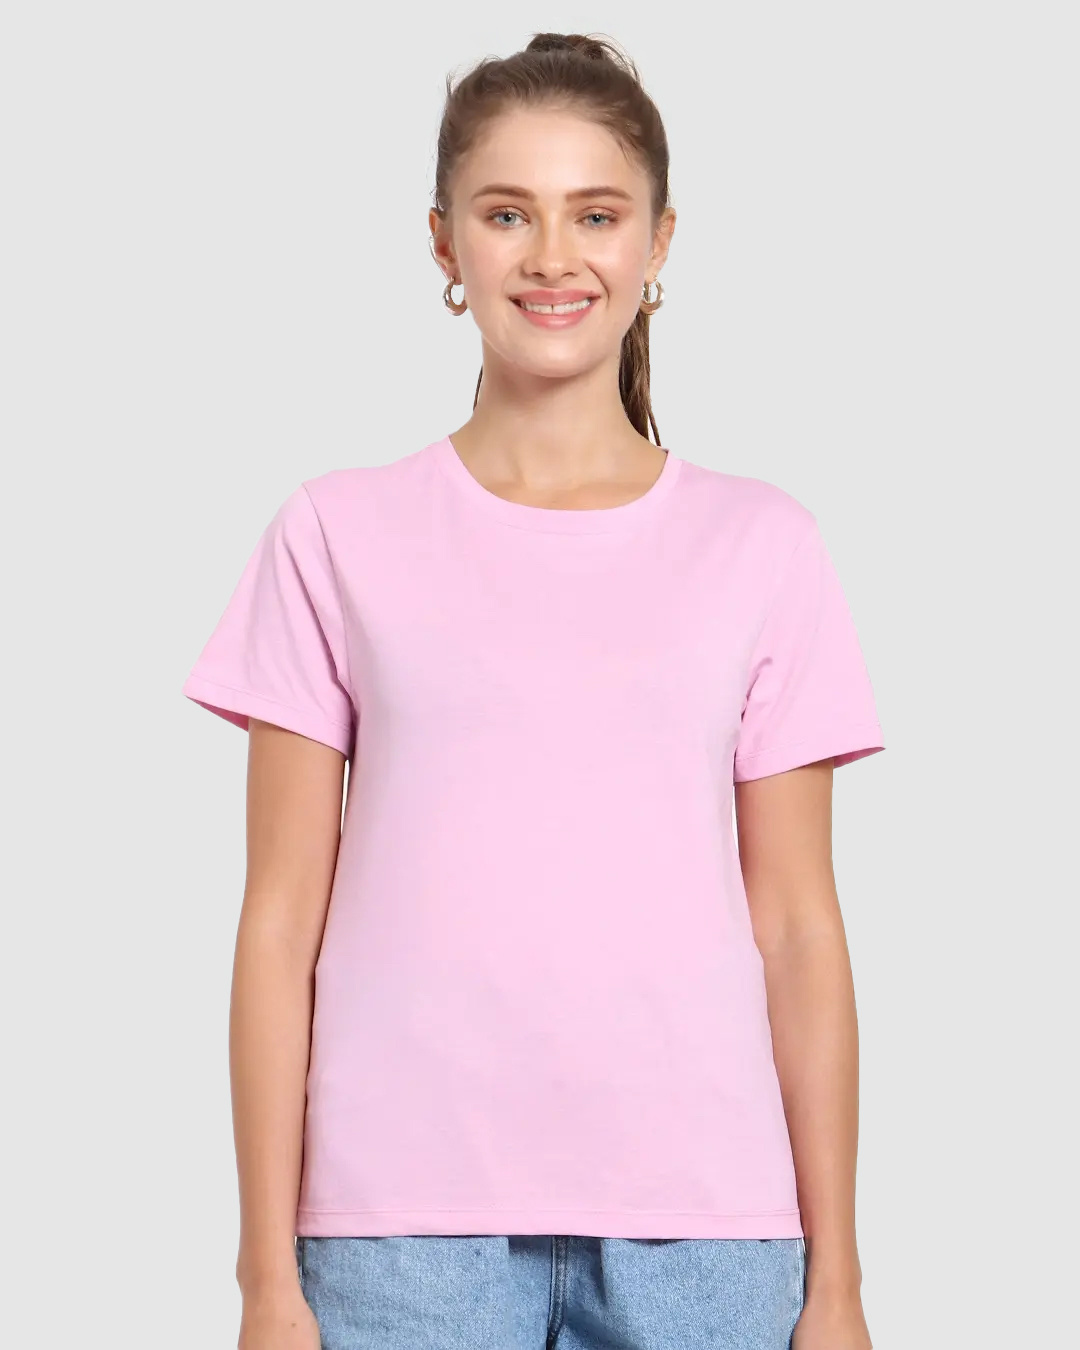 Buy Hashtag Pink Half Sleeve T-Shirt for Women pink Online at Bewakoof